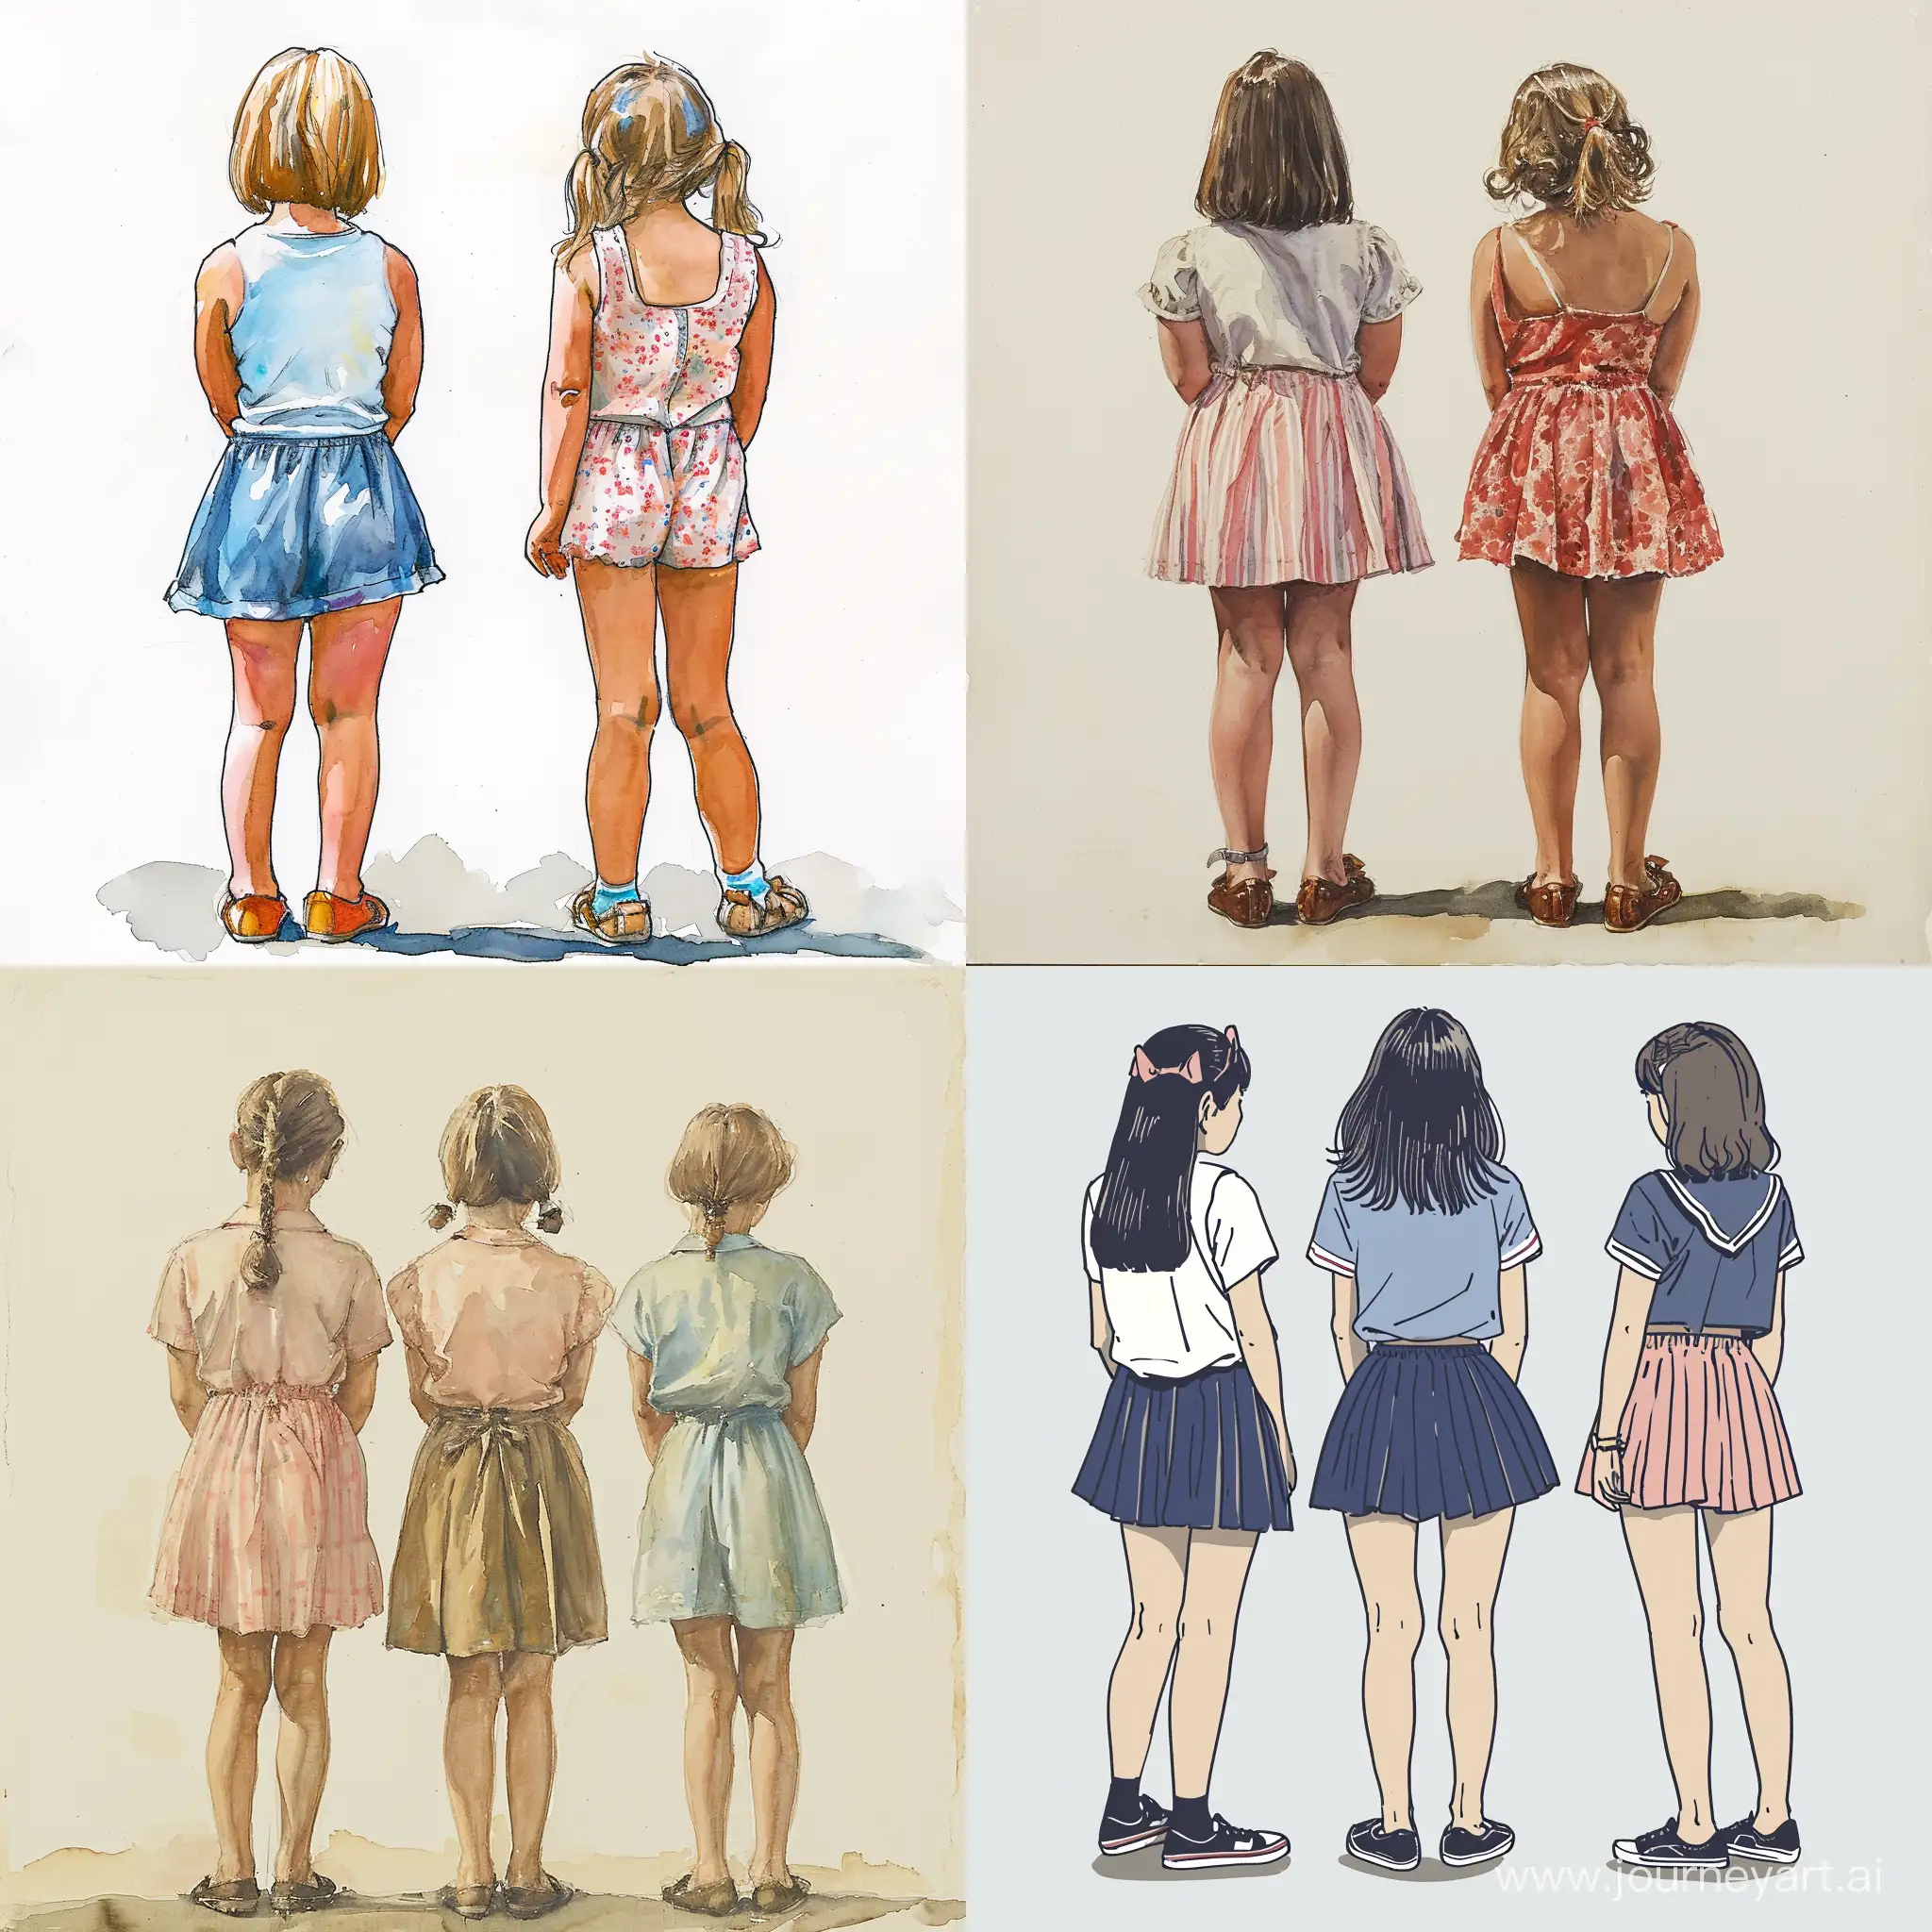 Girls-Standing-Back-View-Illustration-in-Monochrome